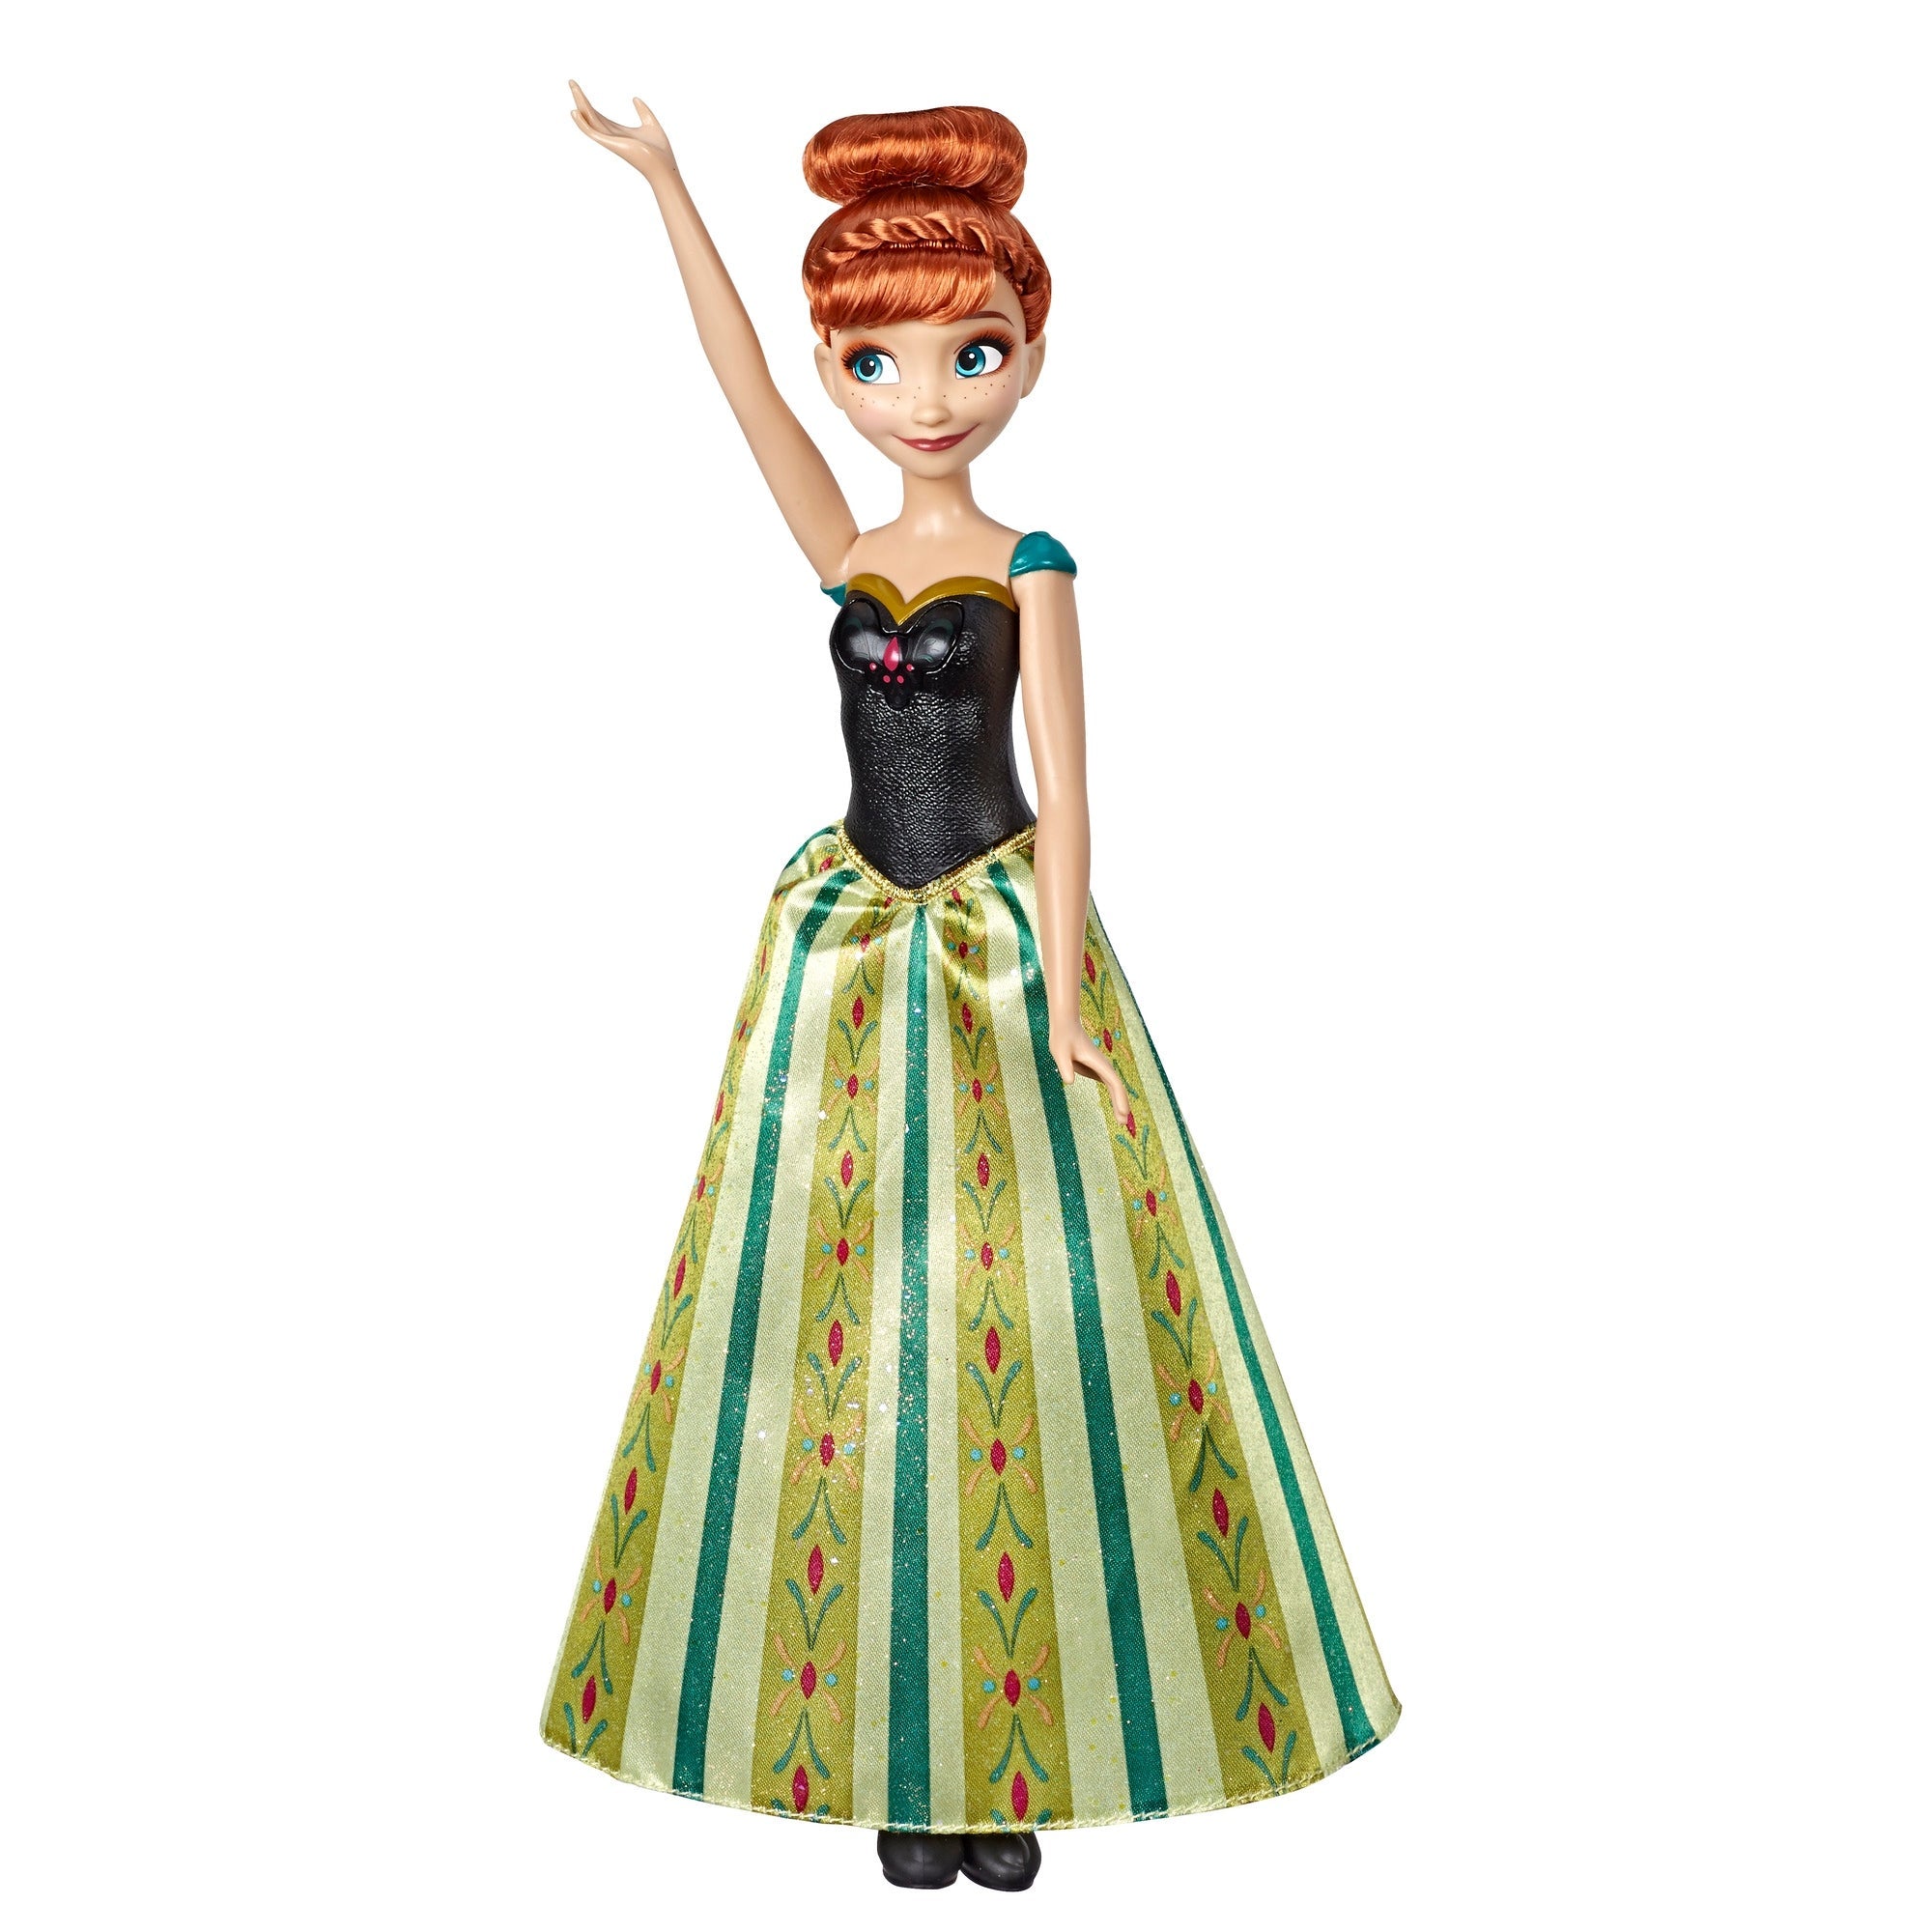 Disney Princess: Frozen Singing Doll